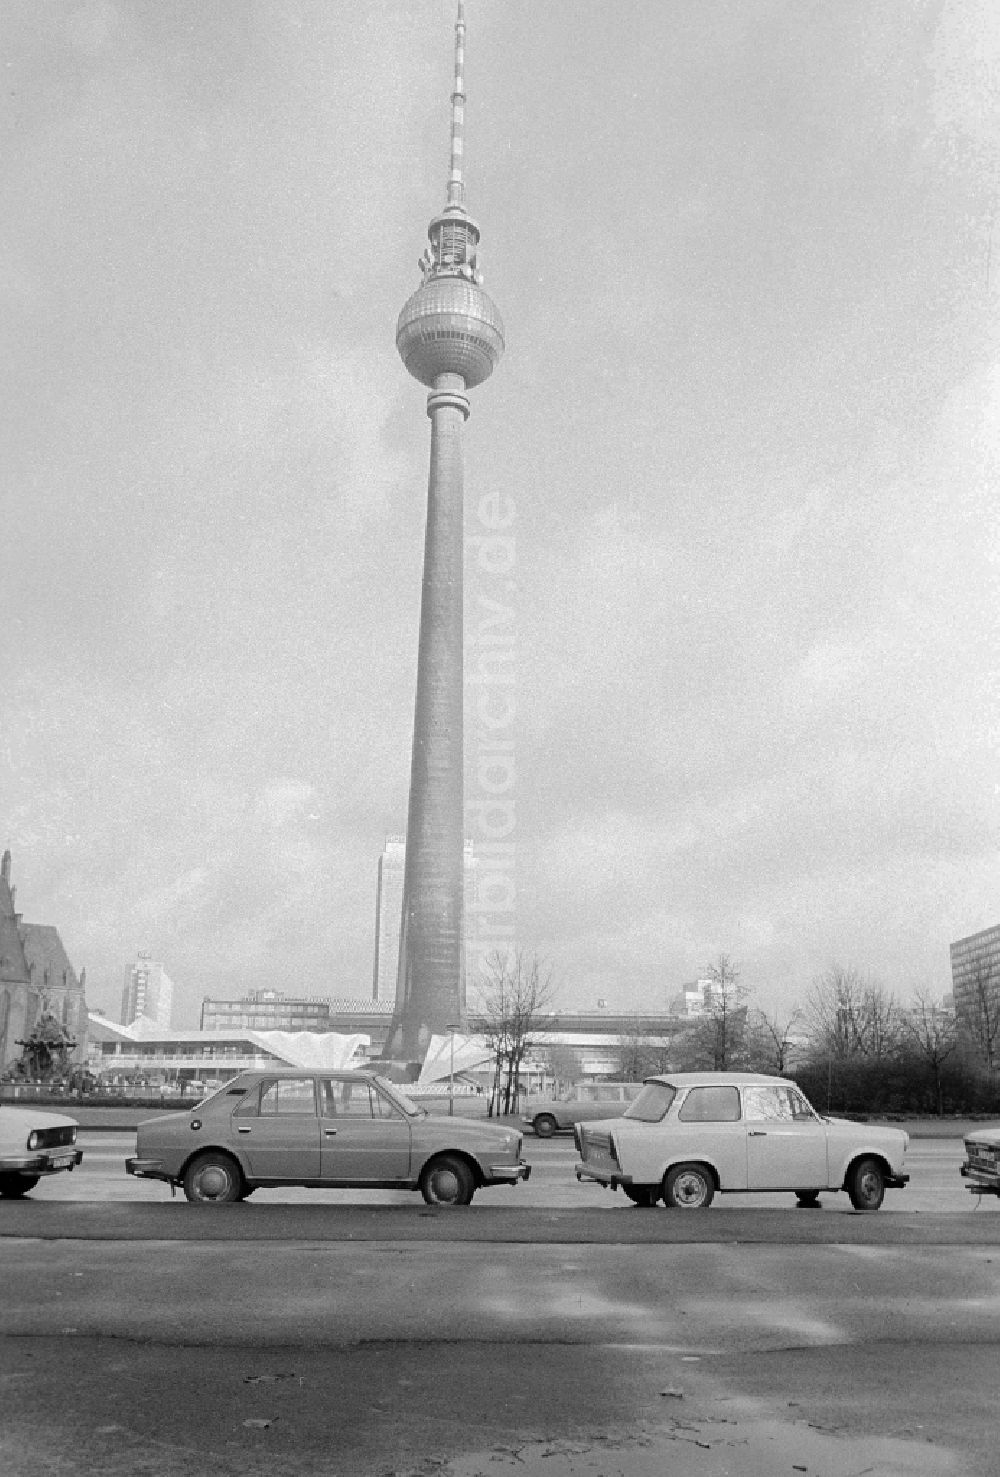 DDR-Bildarchiv: Berlin - Berliner Fernsehturm in Berlin, der ehemaligen Hauptstadt der DDR, Deutsche Demokratische Republik